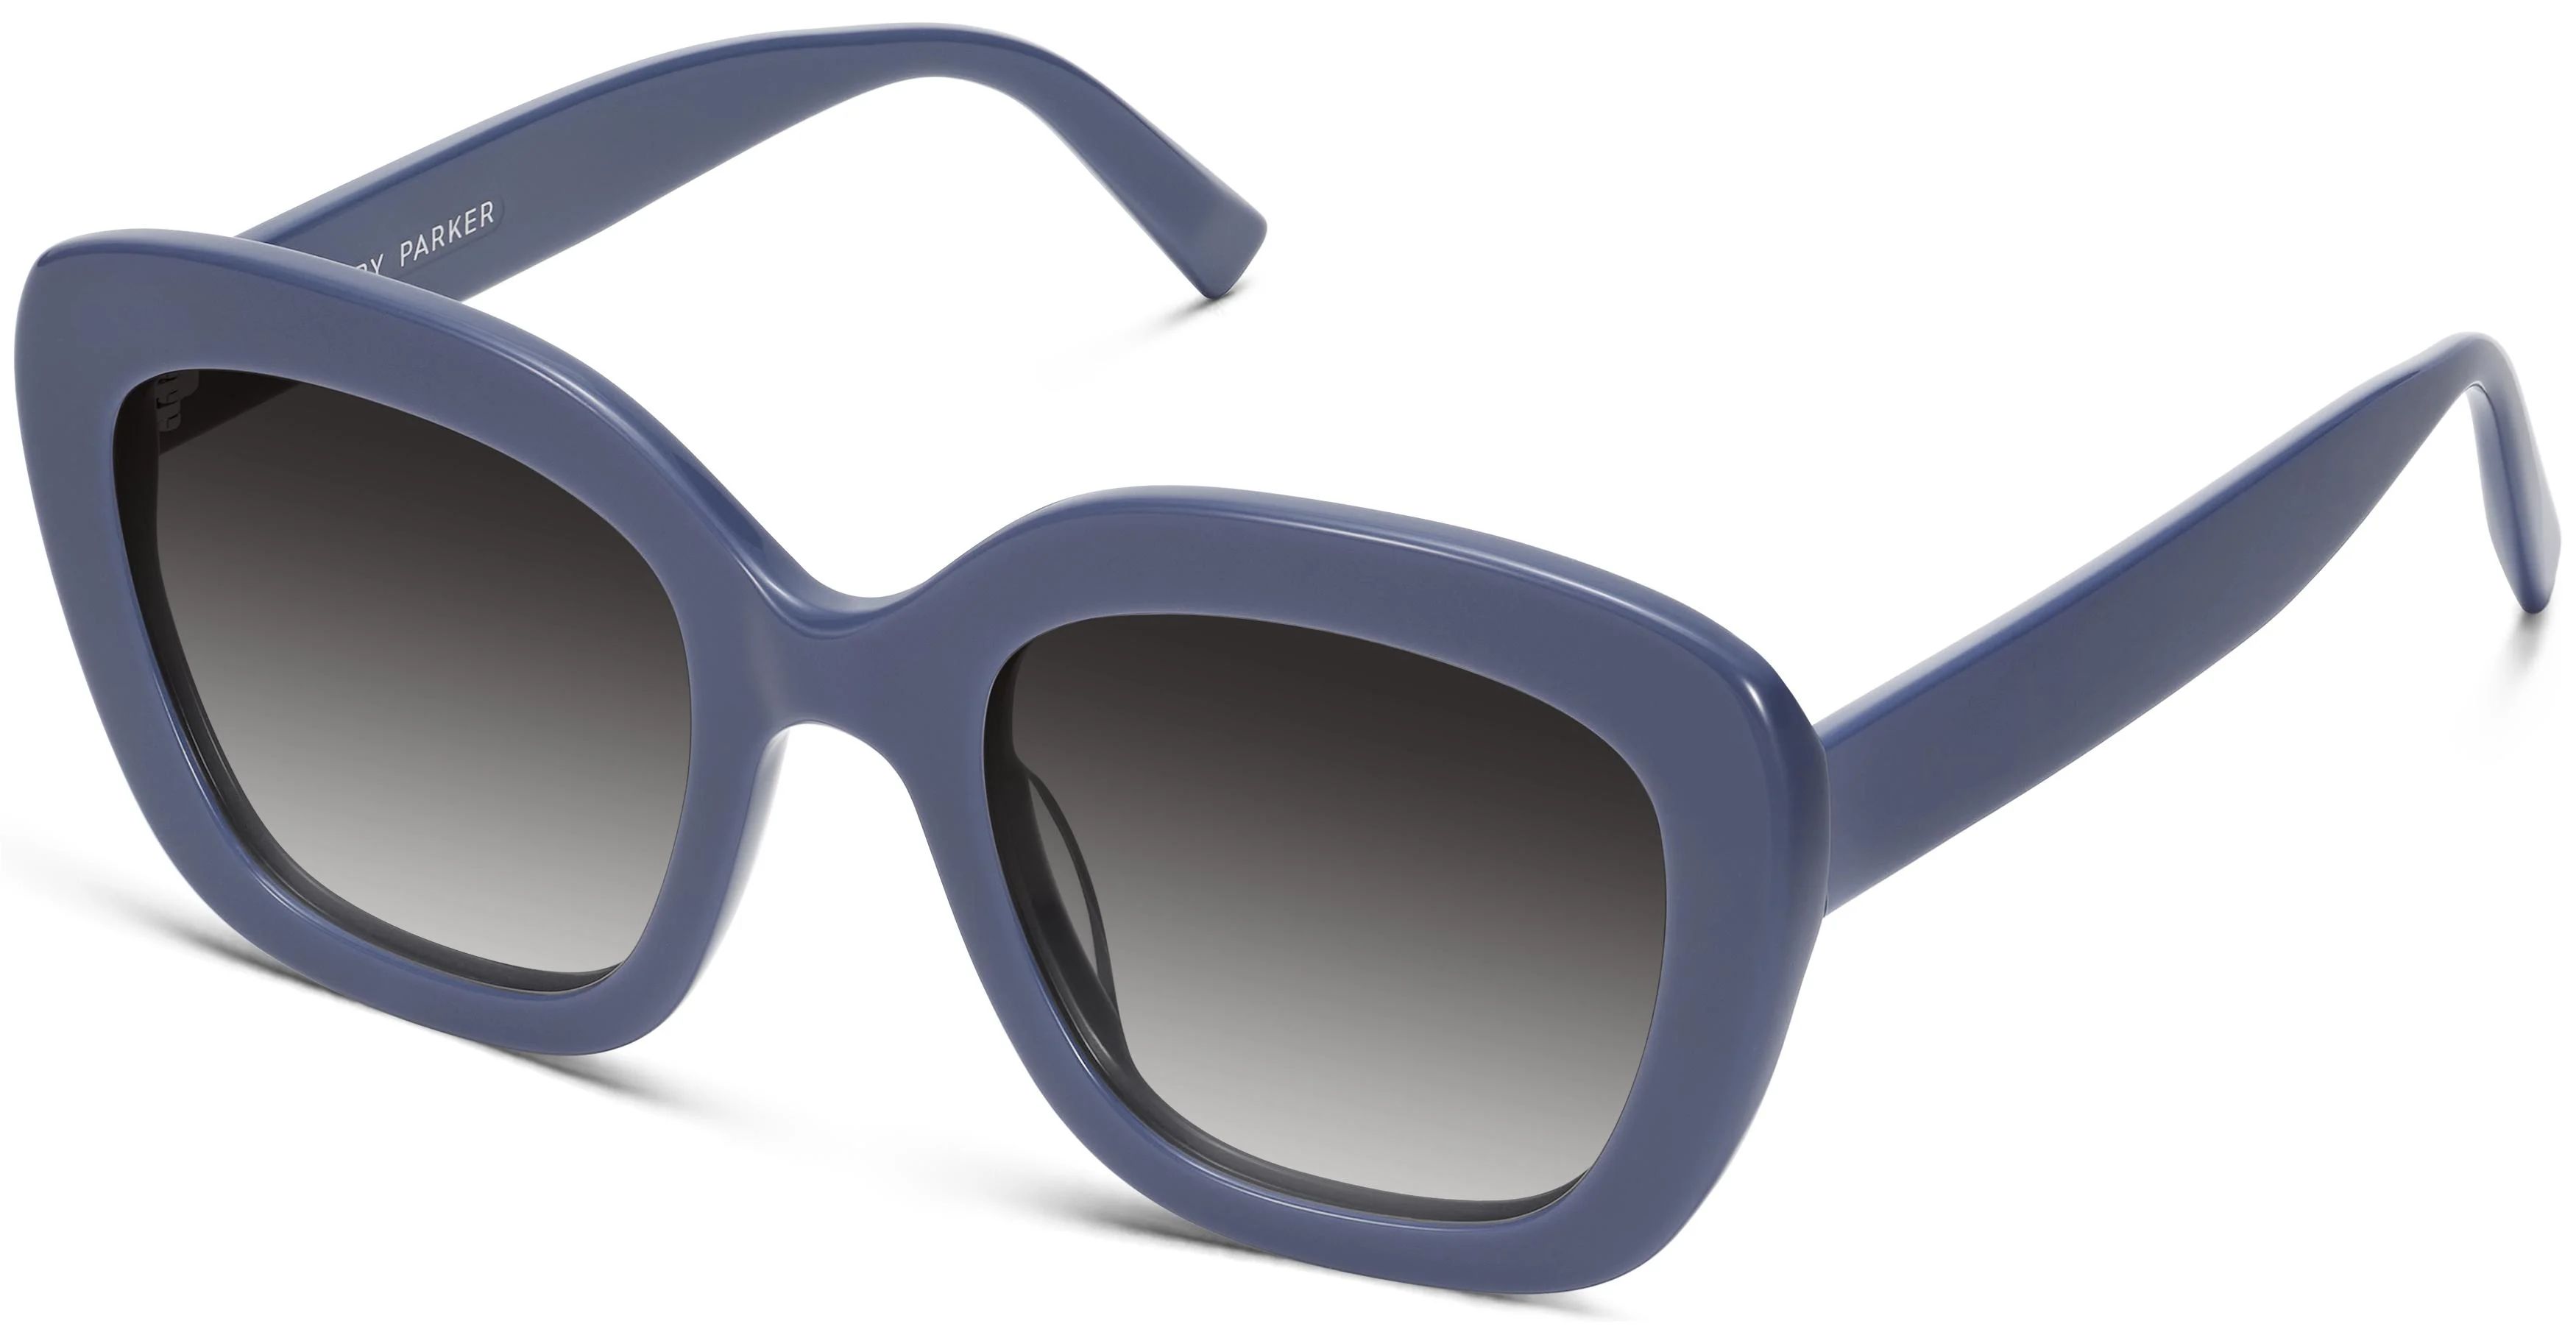 Gabriela Sunglasses in Denim Blue | Warby Parker | Warby Parker (US)